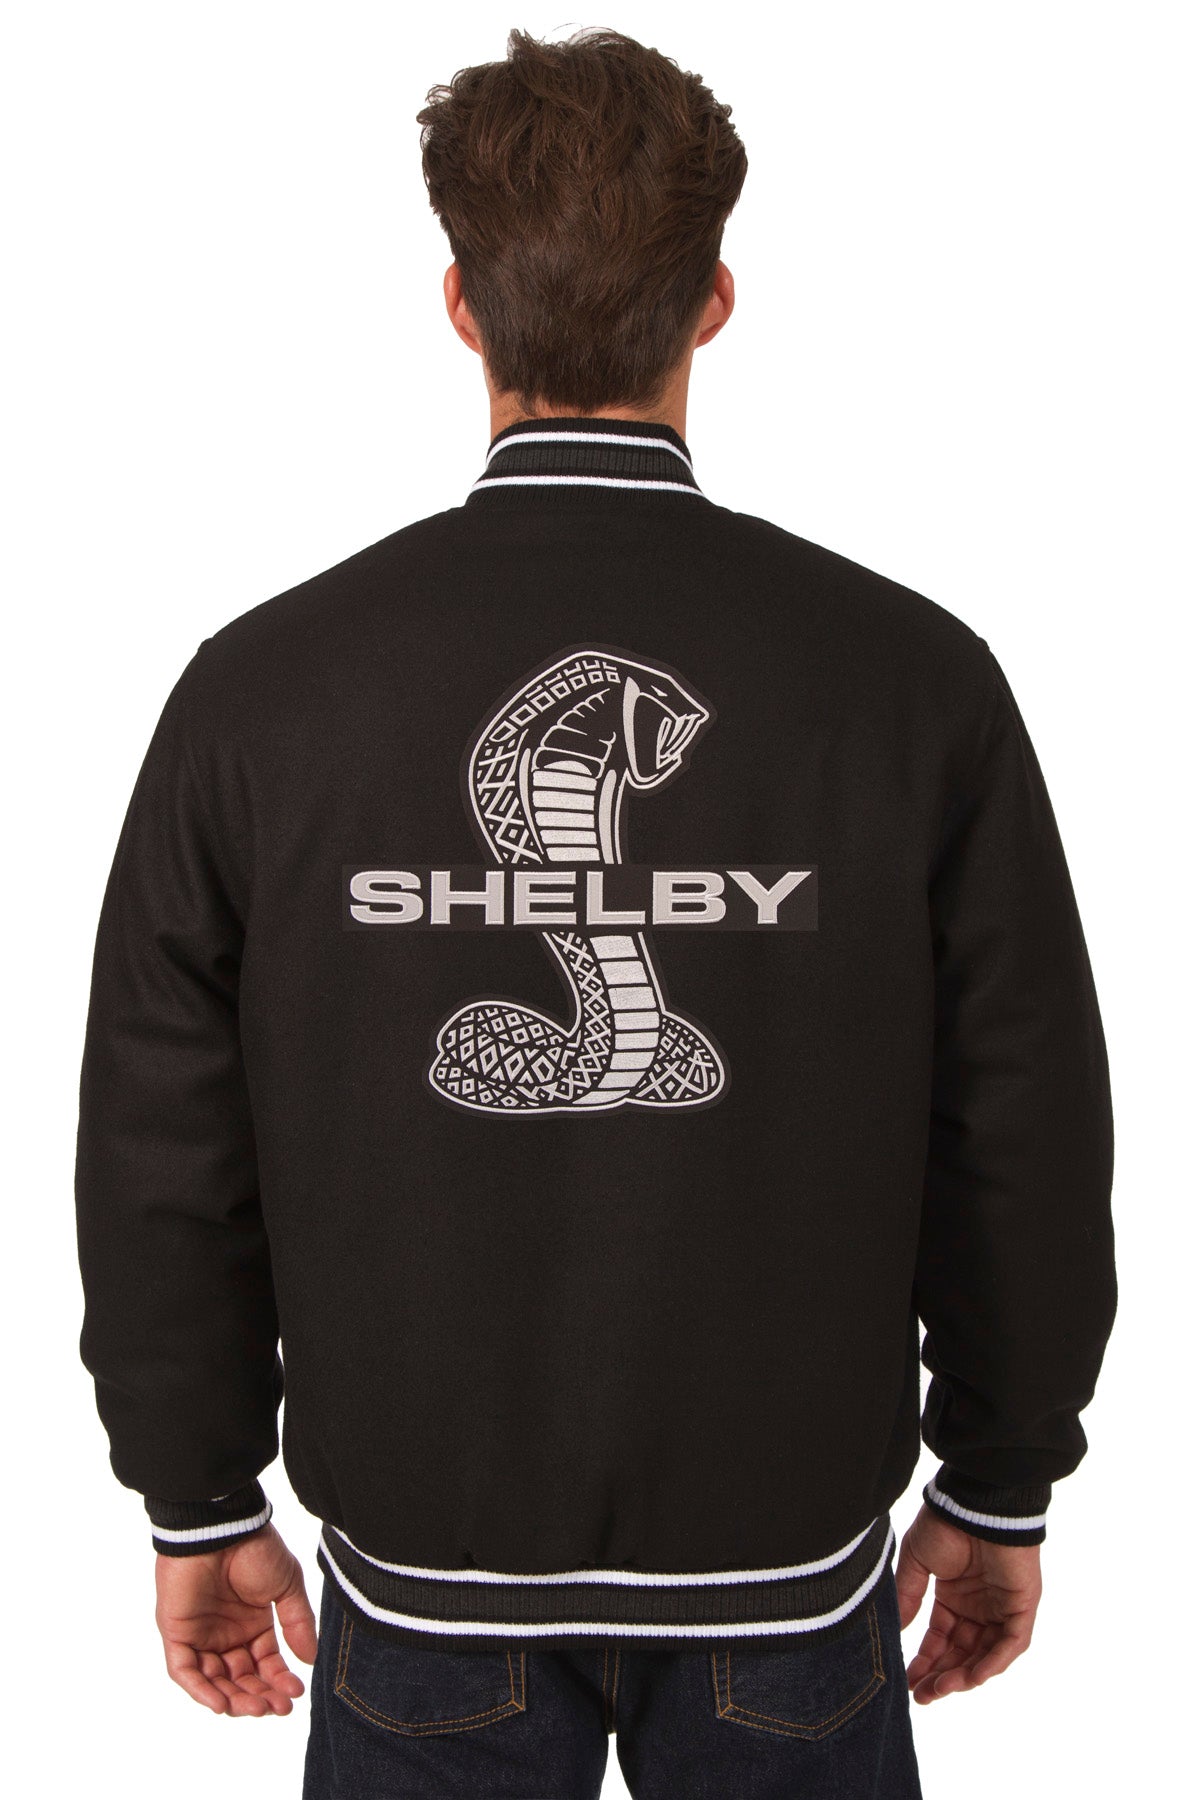 Shelby Wool Varsity Jacket   Black   J.H. Sports Jackets